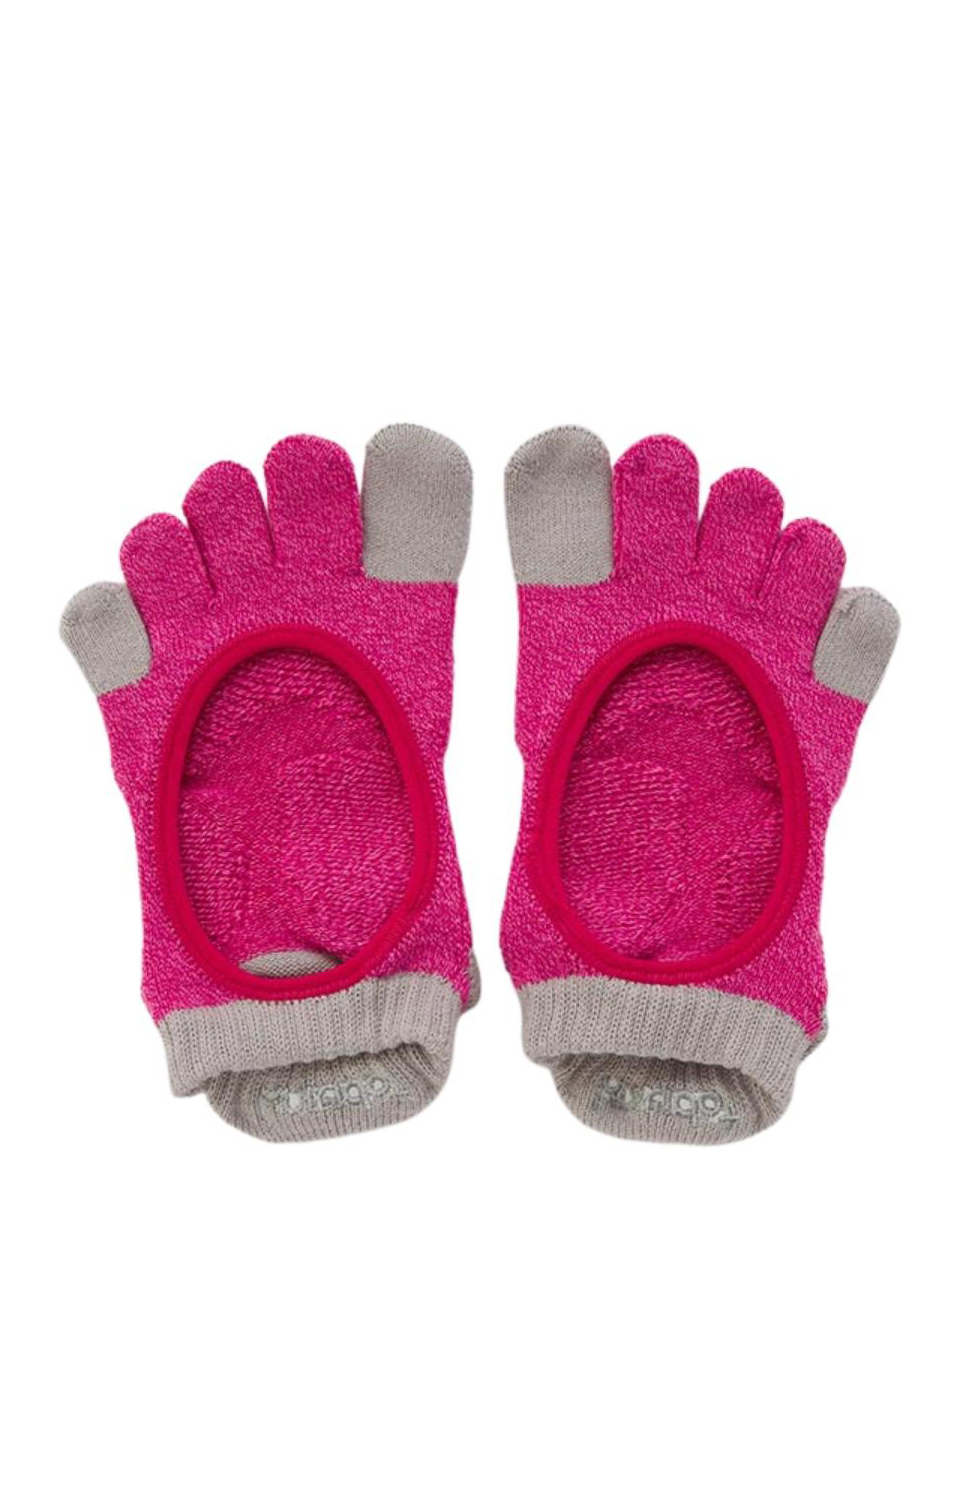 4442 pink toe socks yoga pilates